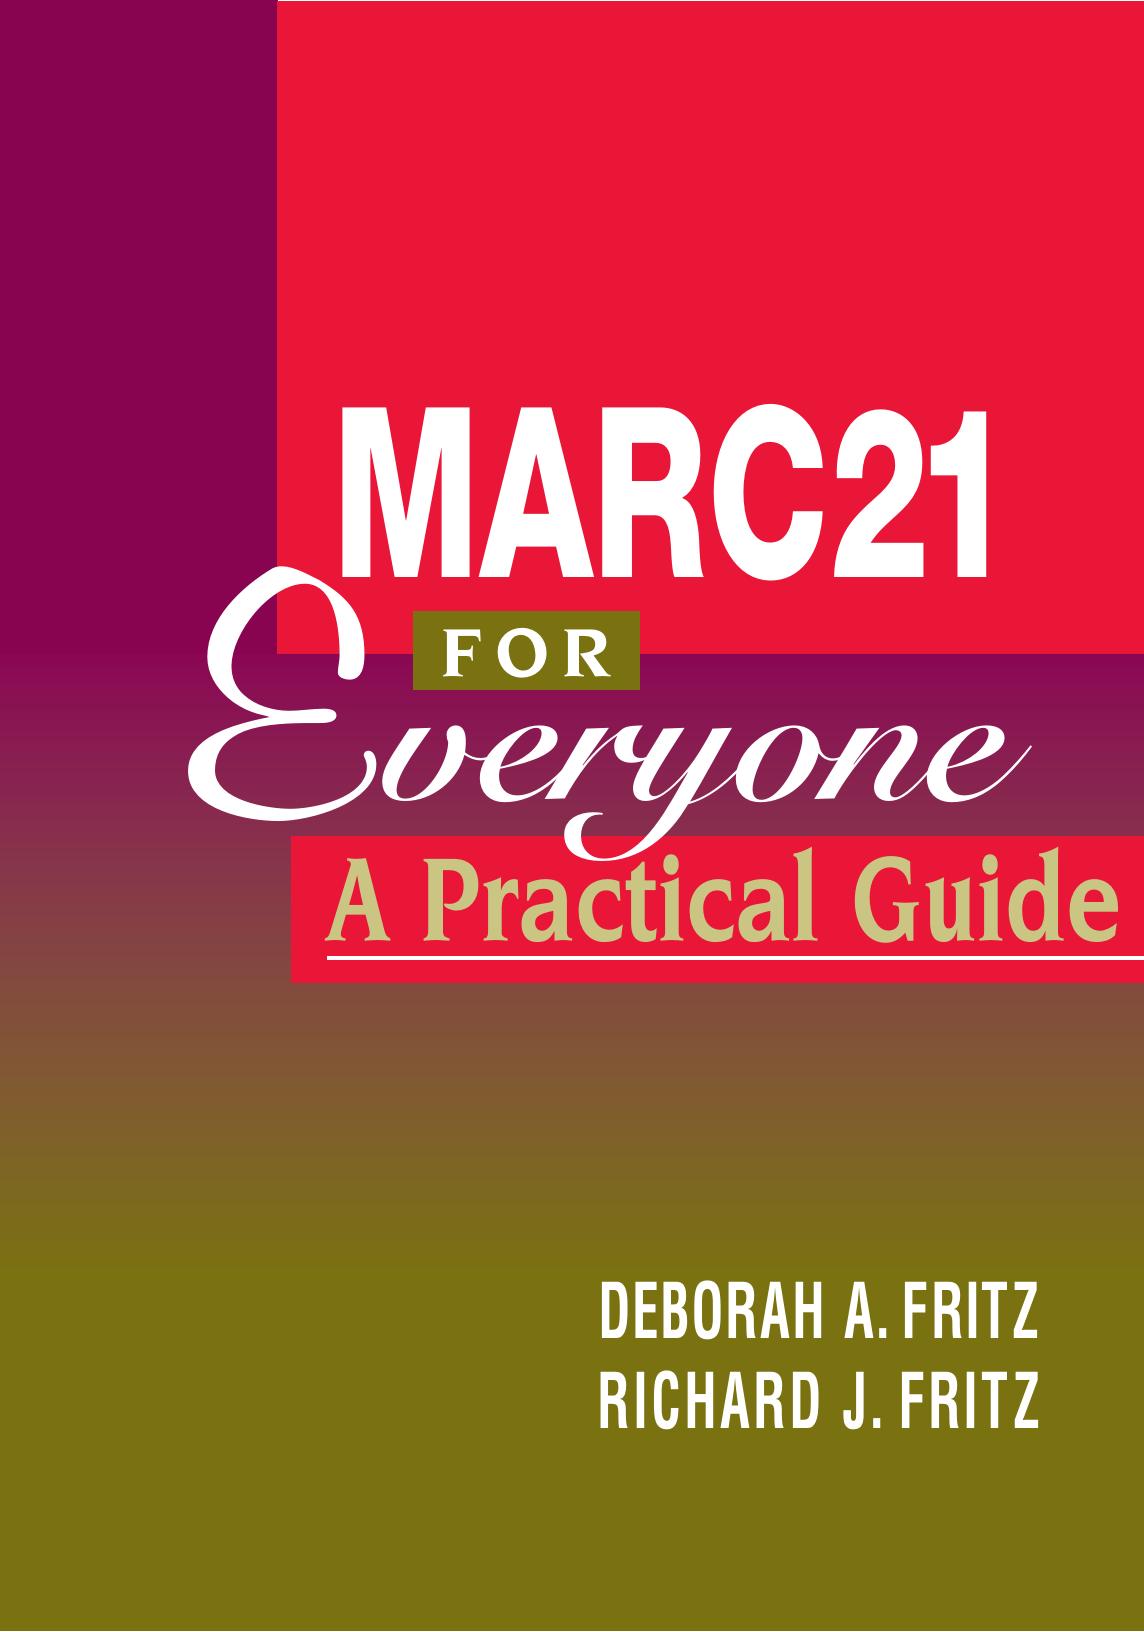 MARC 21 for Everyone : A Practical Guide by Deborah A. Fritz; Richard J. Fritz